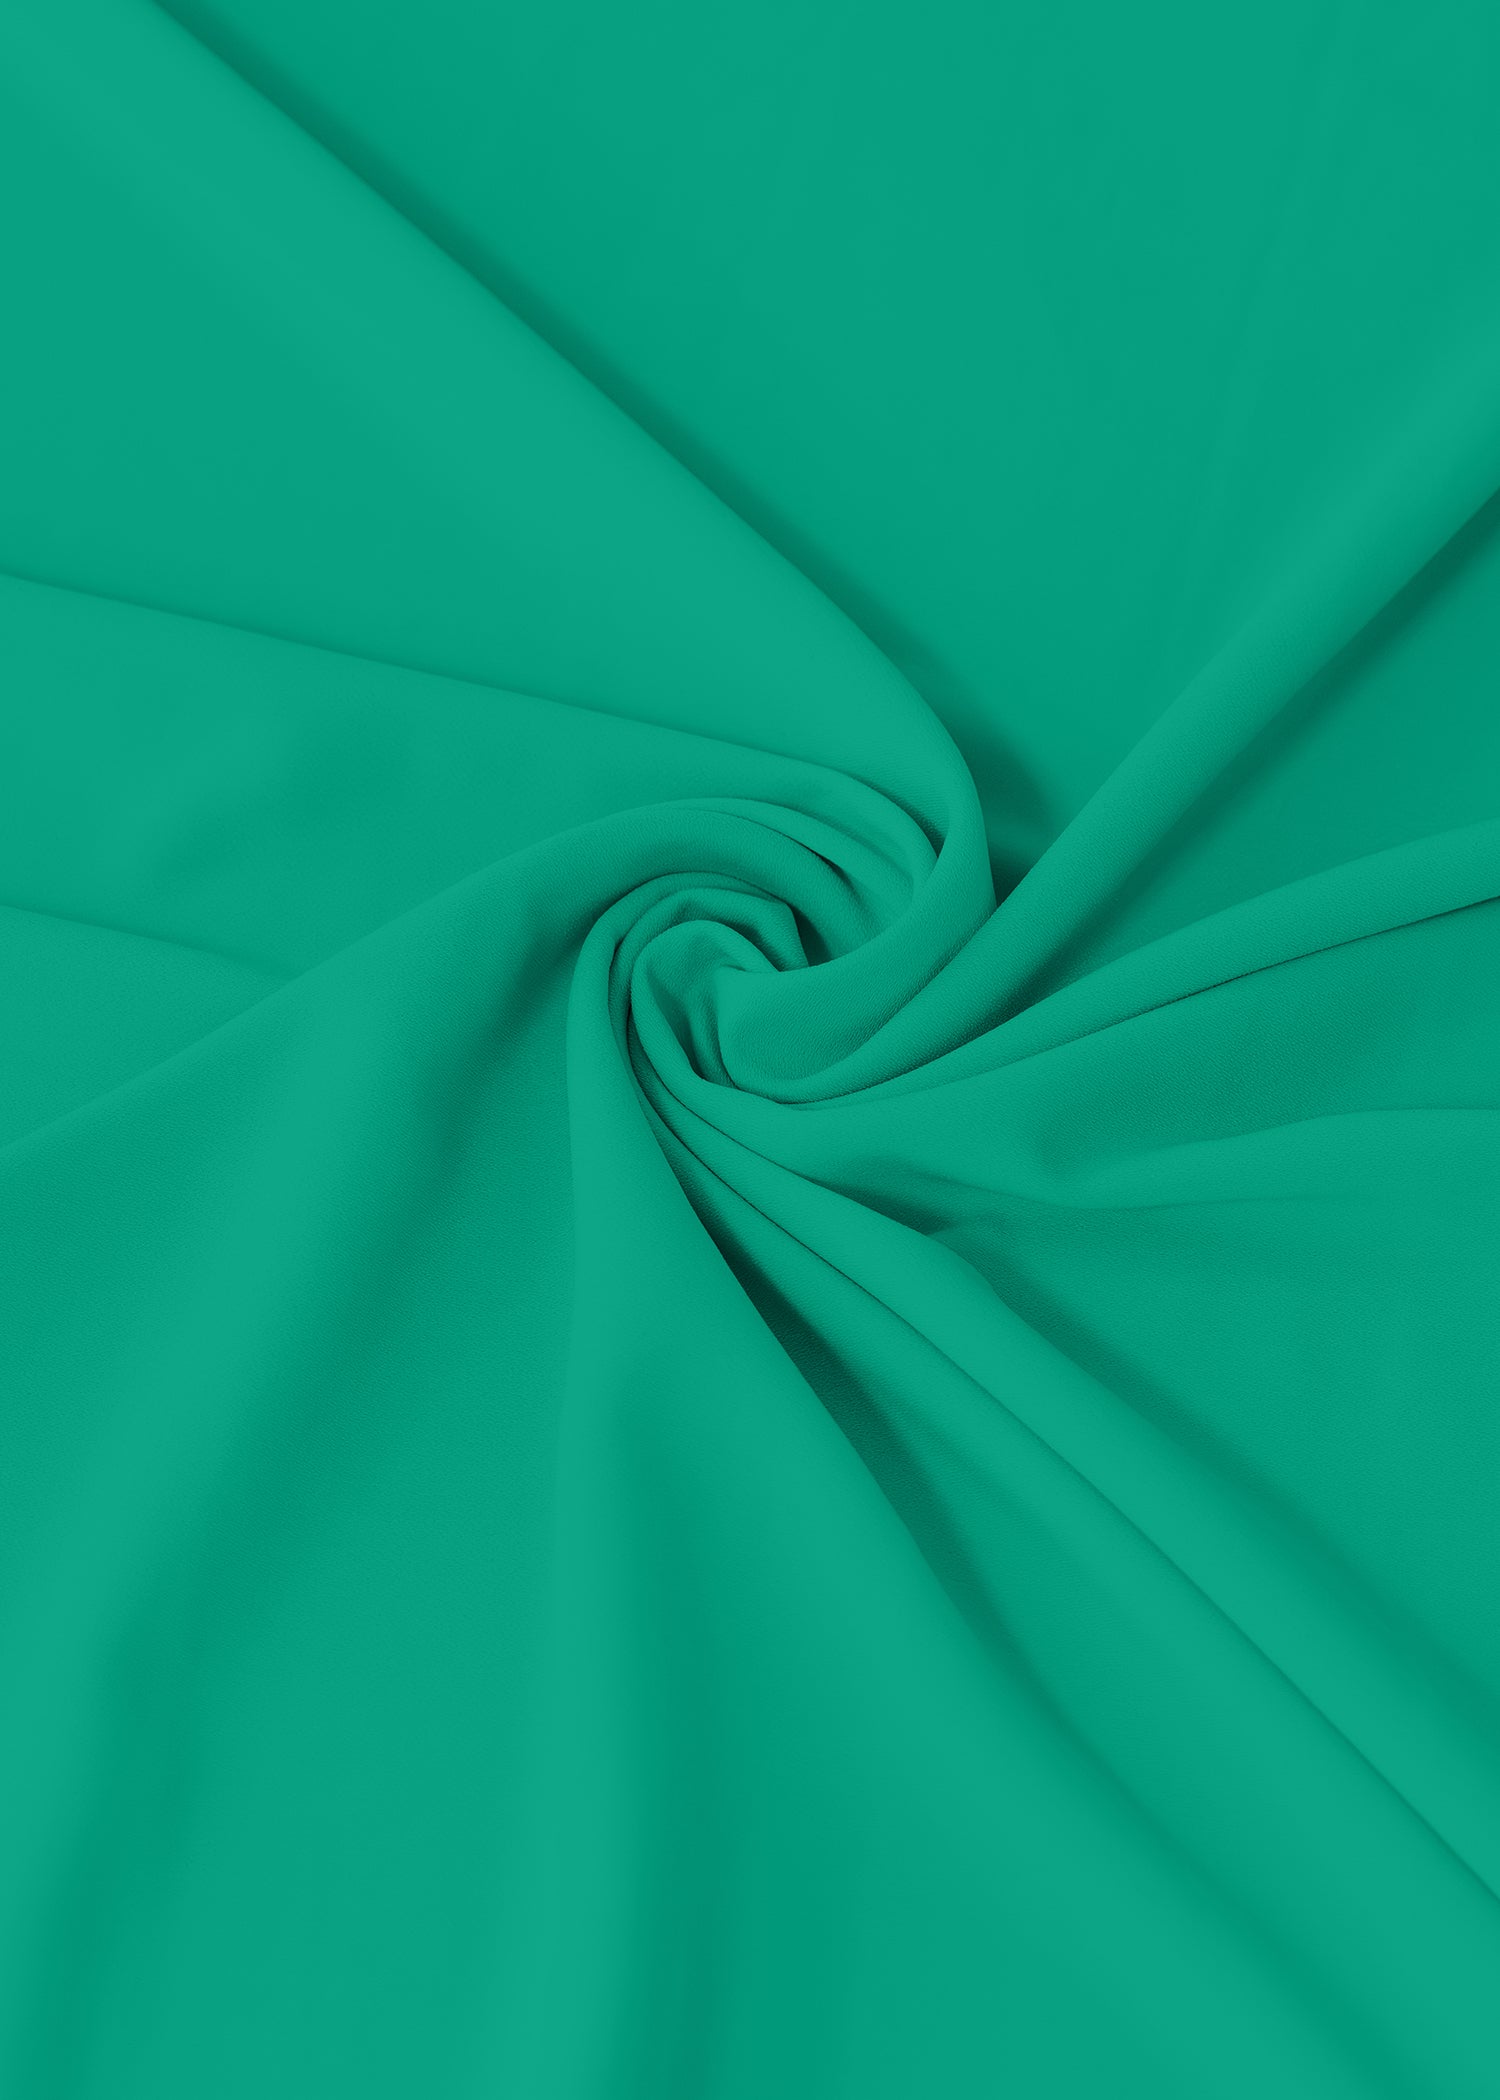 Swatch-Crepe-Emerald